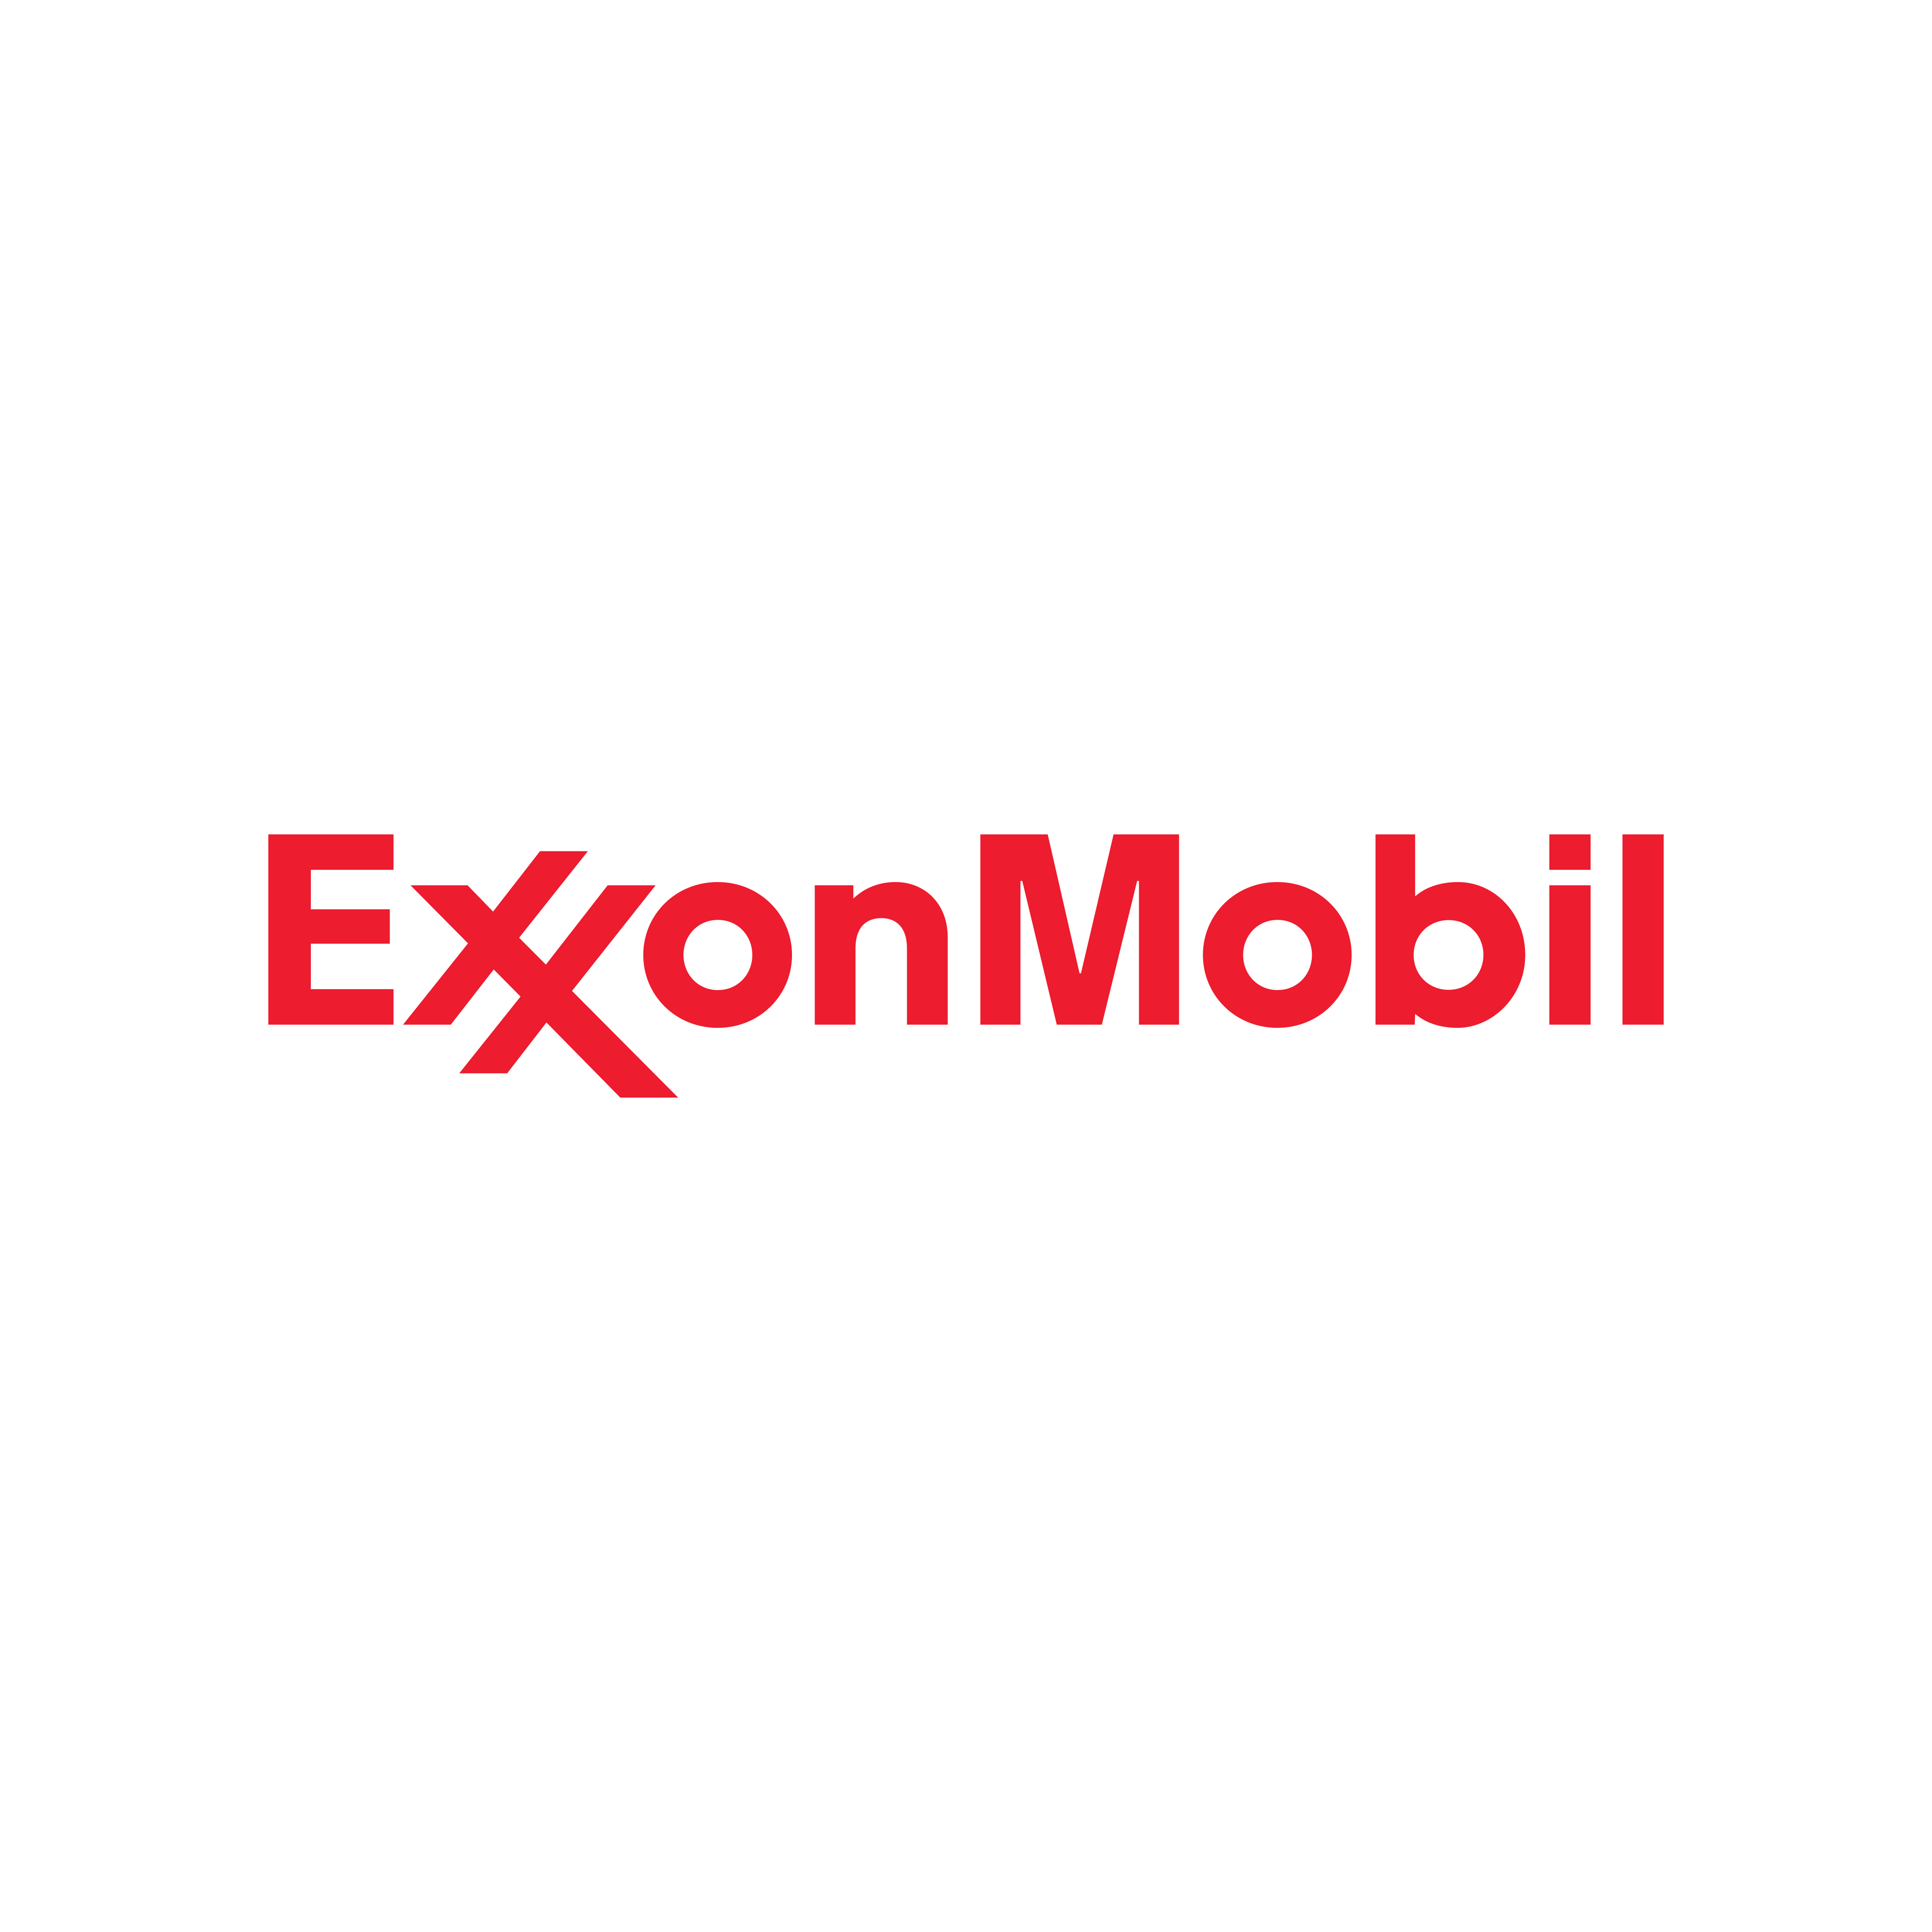 ExxonMobil logo PNG.